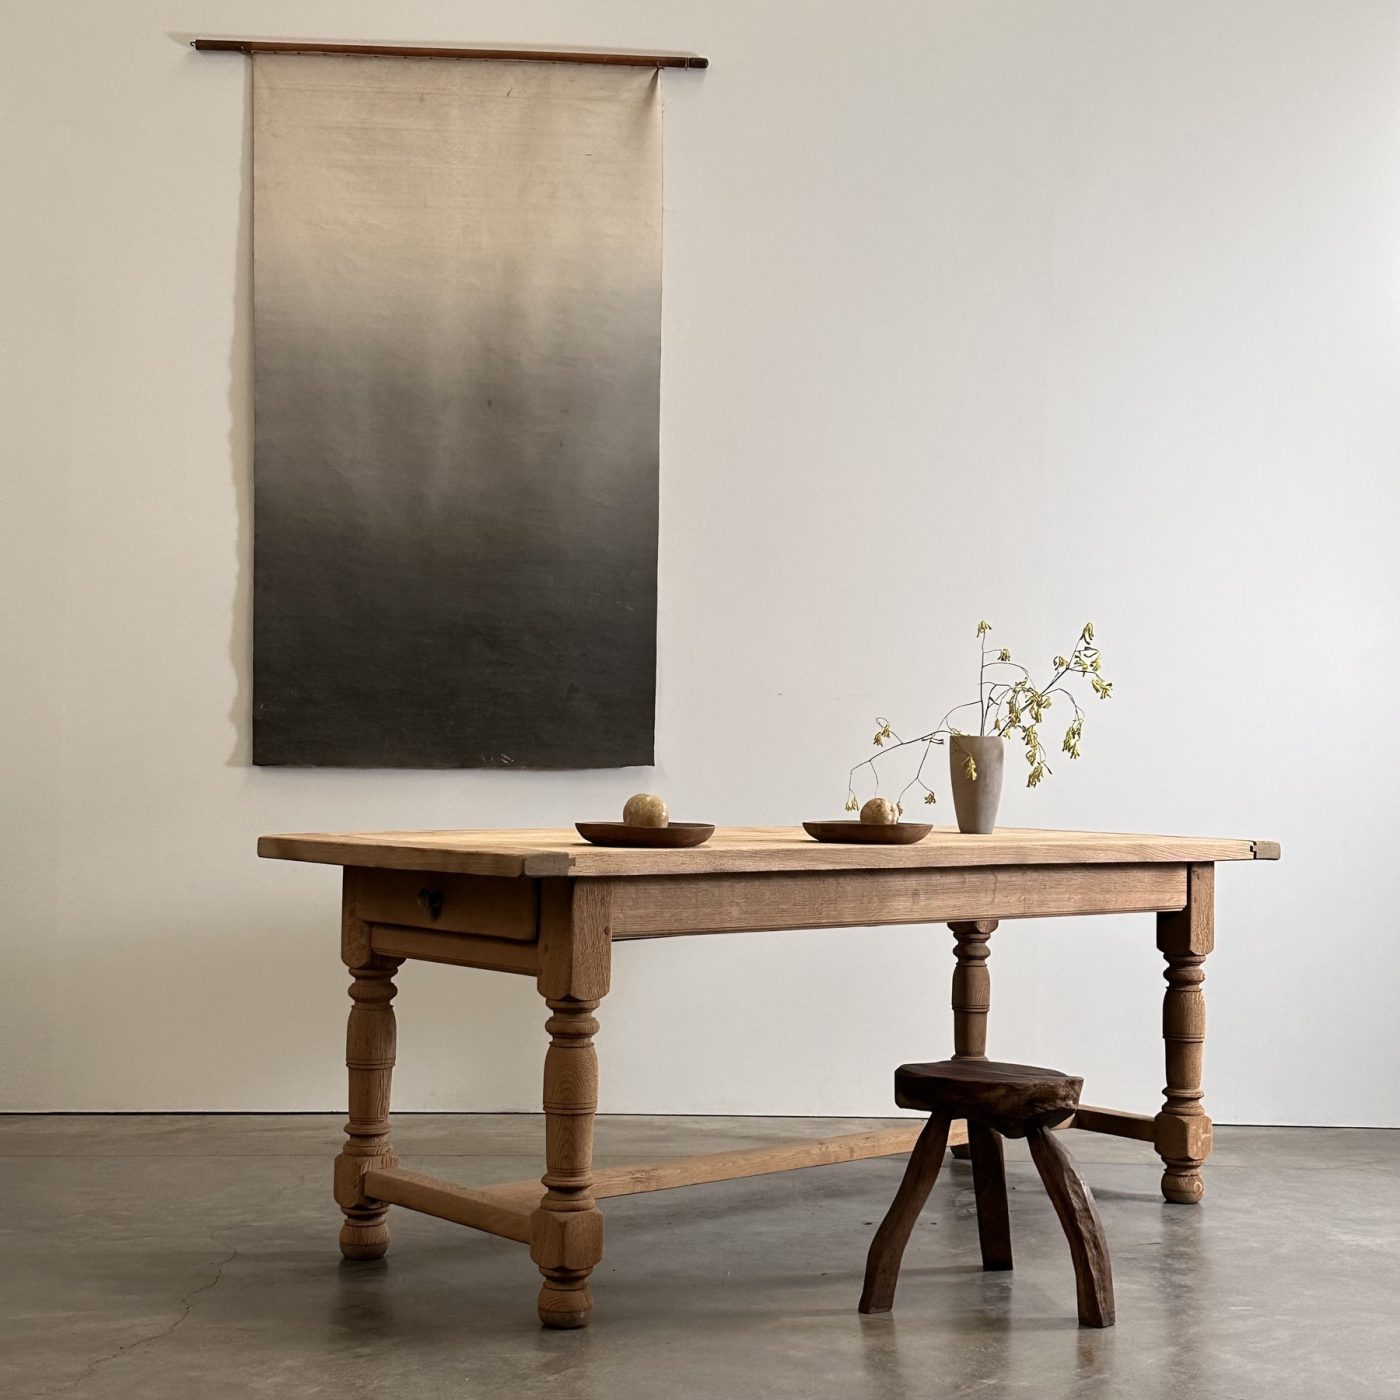 objet-vagabond-large-bleached-table0002